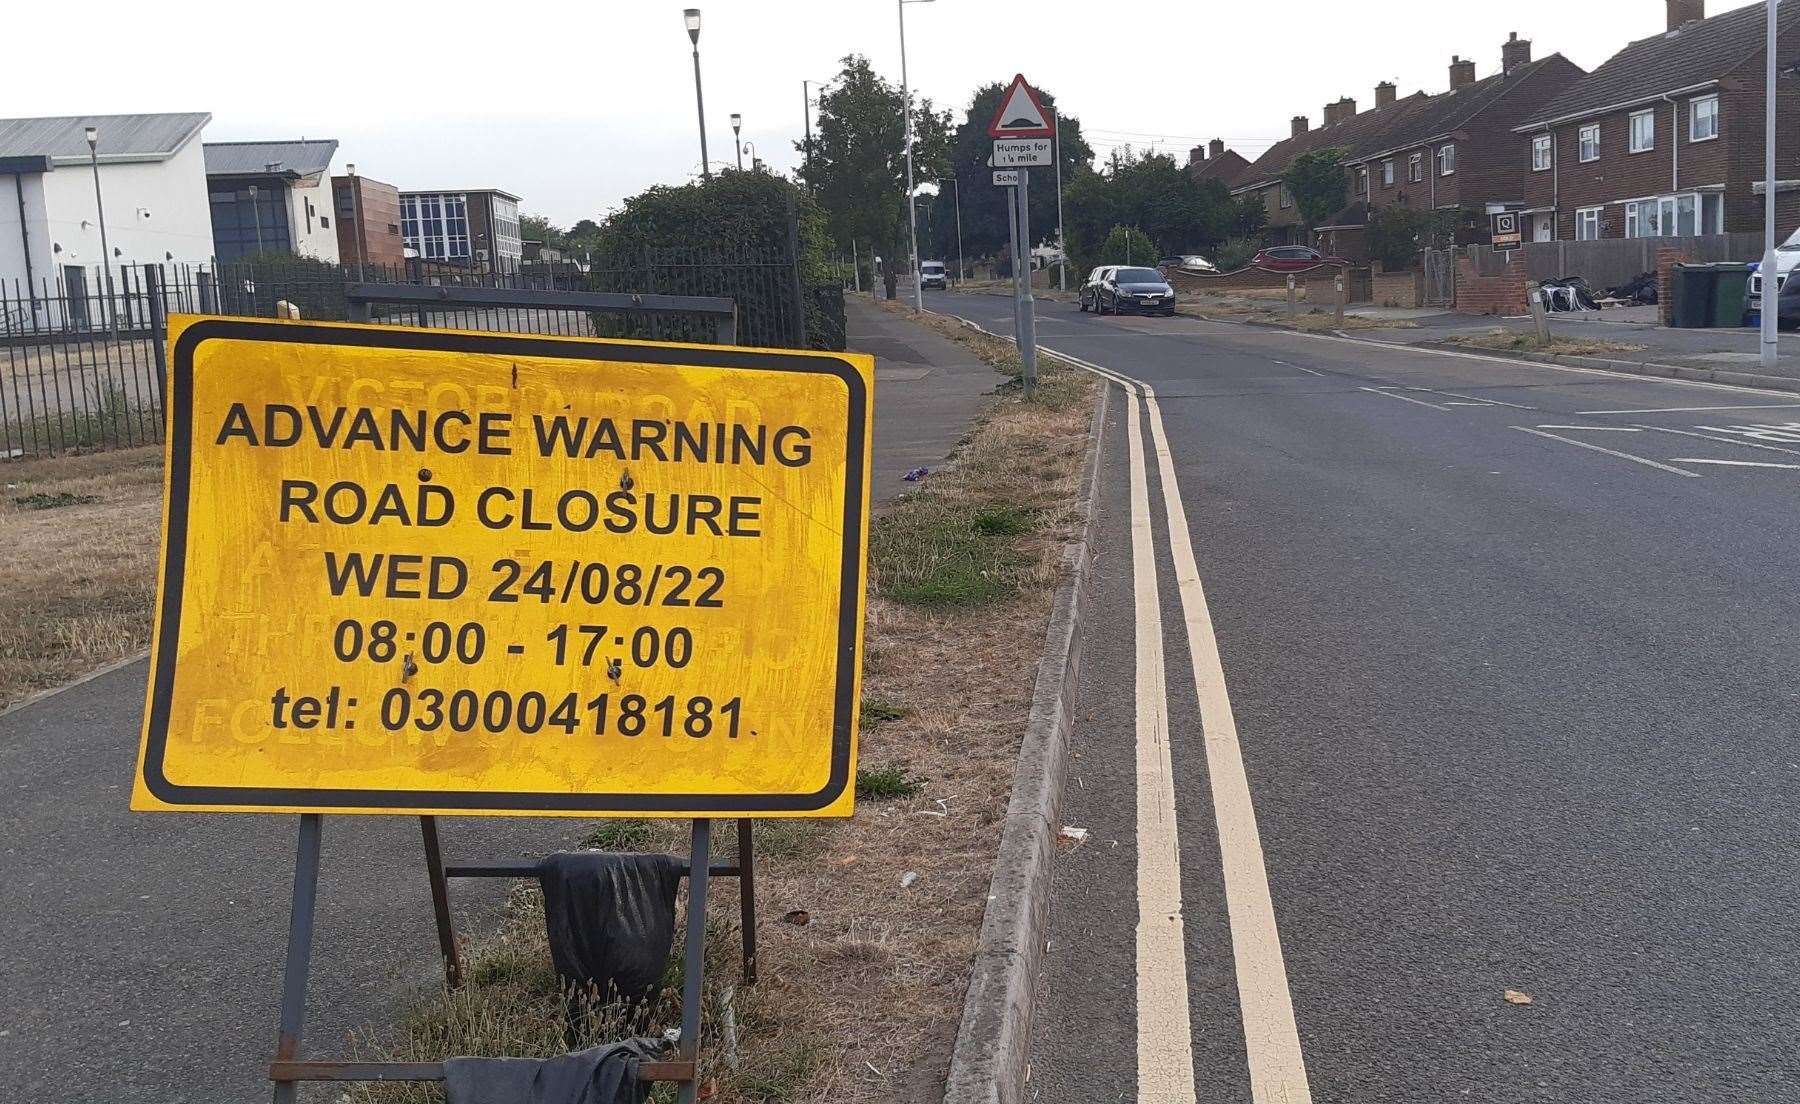 Swanstree Avenue, Sittingbourne, is set to close next week